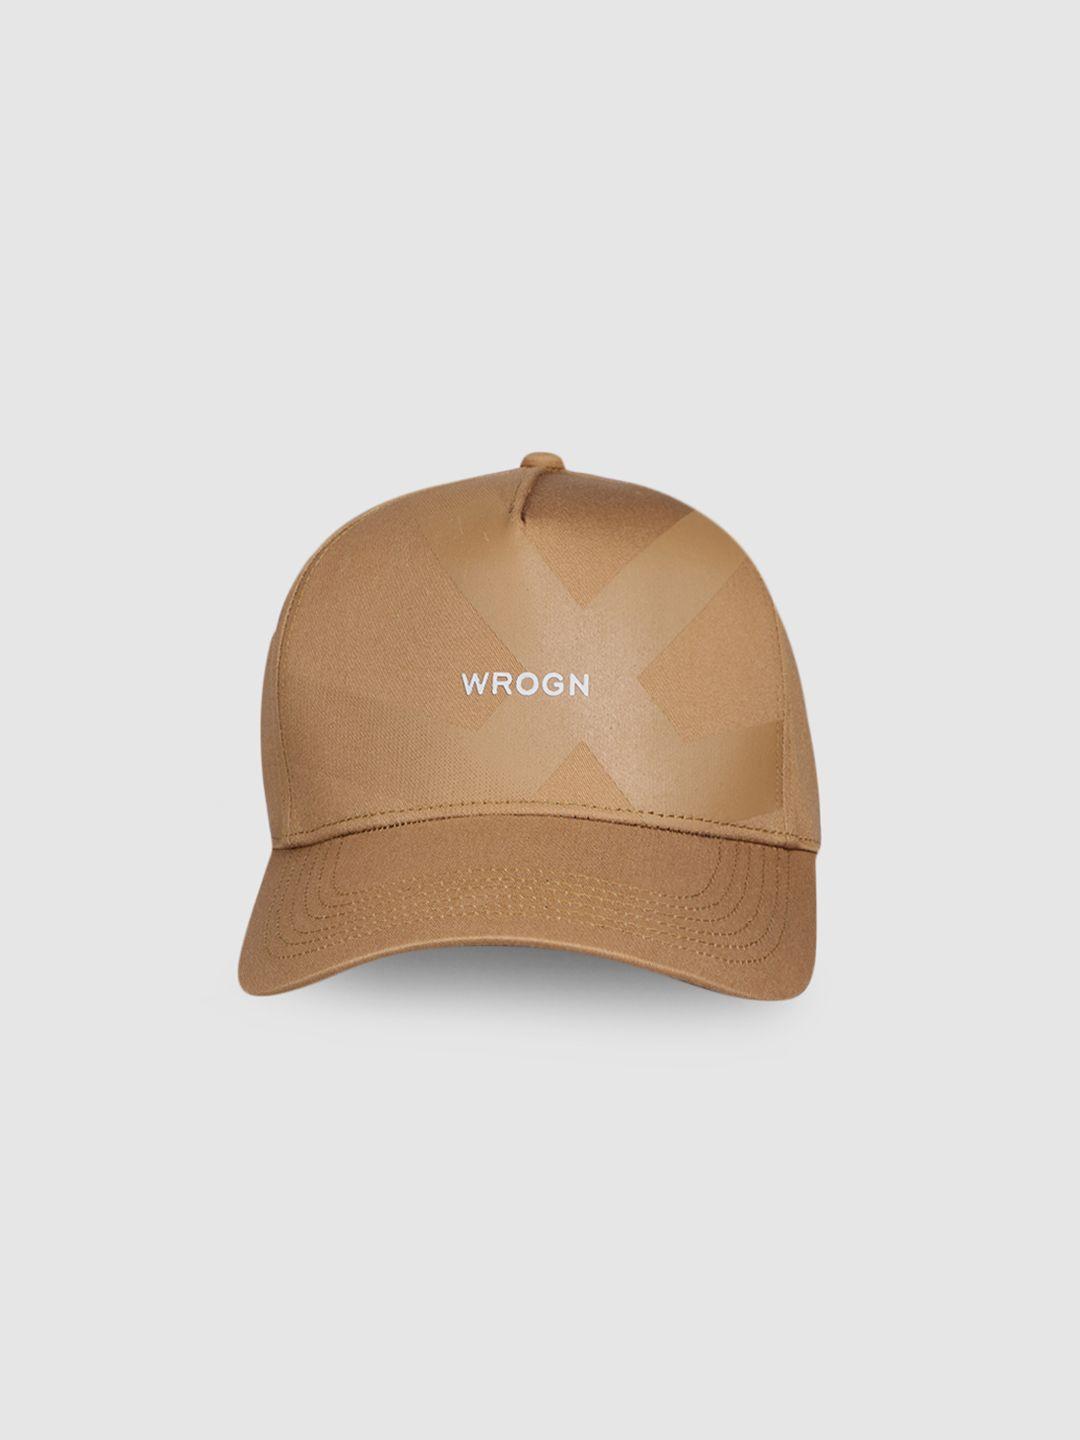 wrogn unisex khaki brown baseball cap